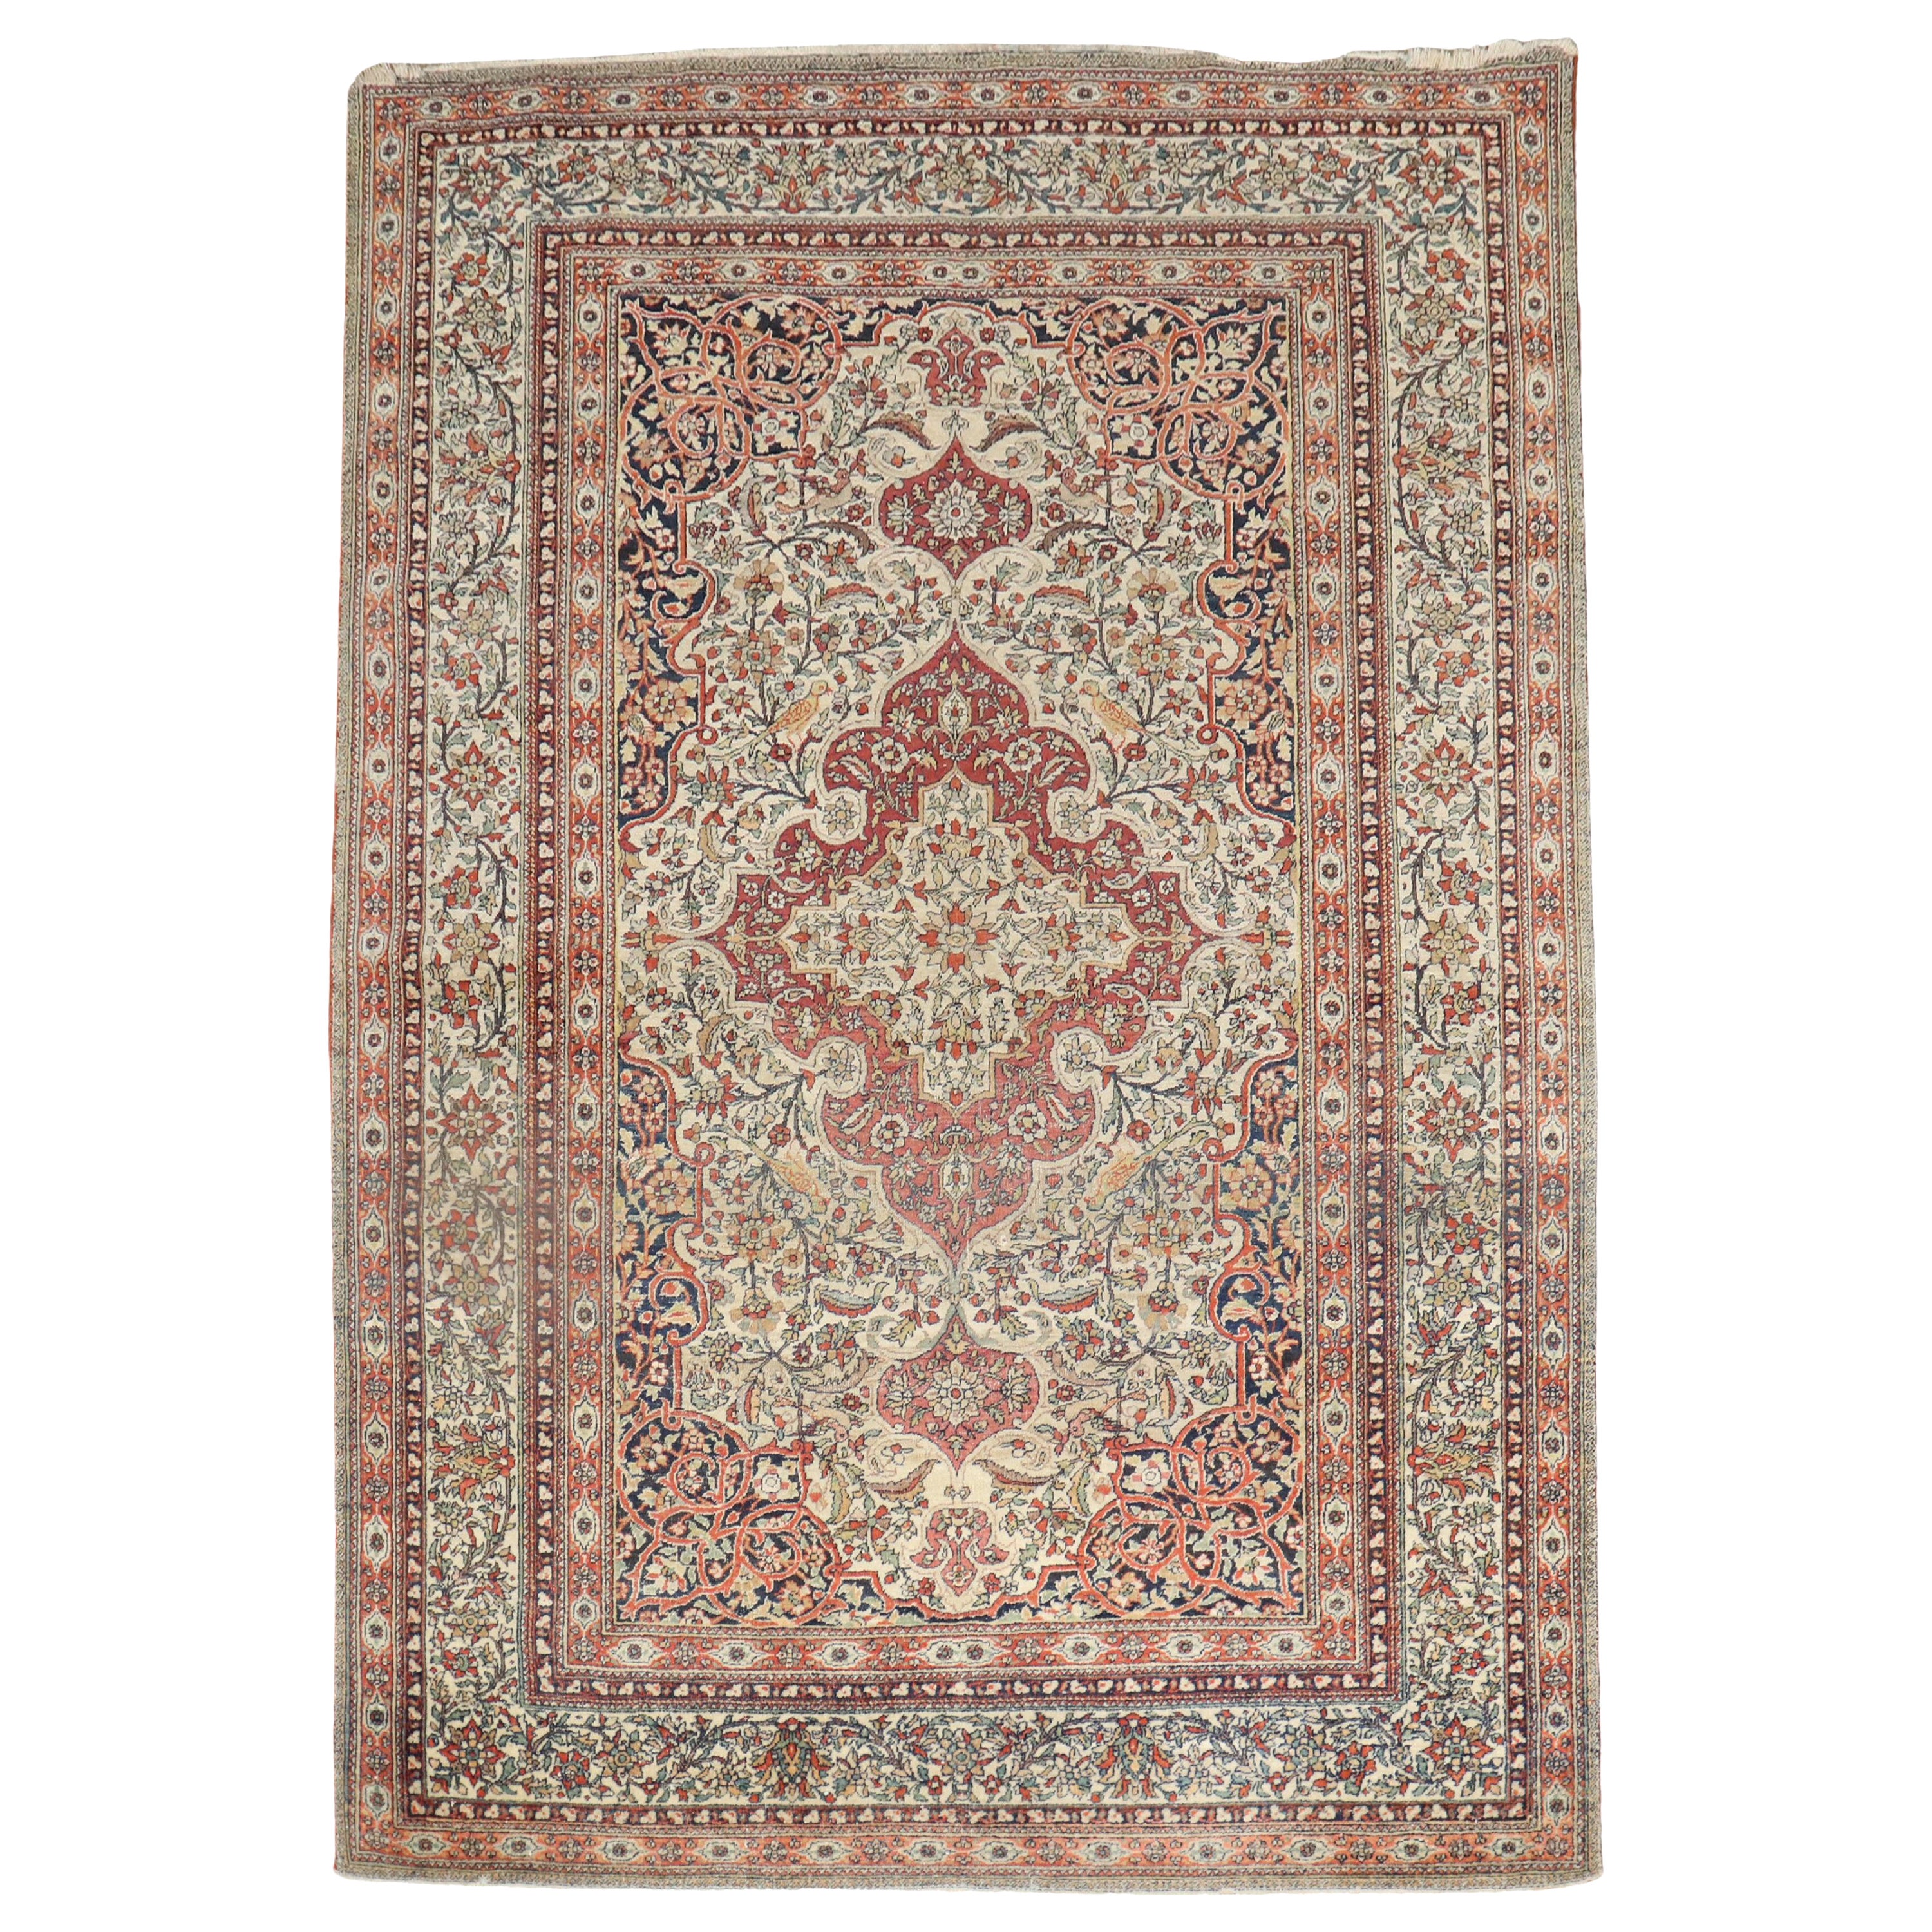 Pictorial Persian Isfahan Prayer Carpet For Sale